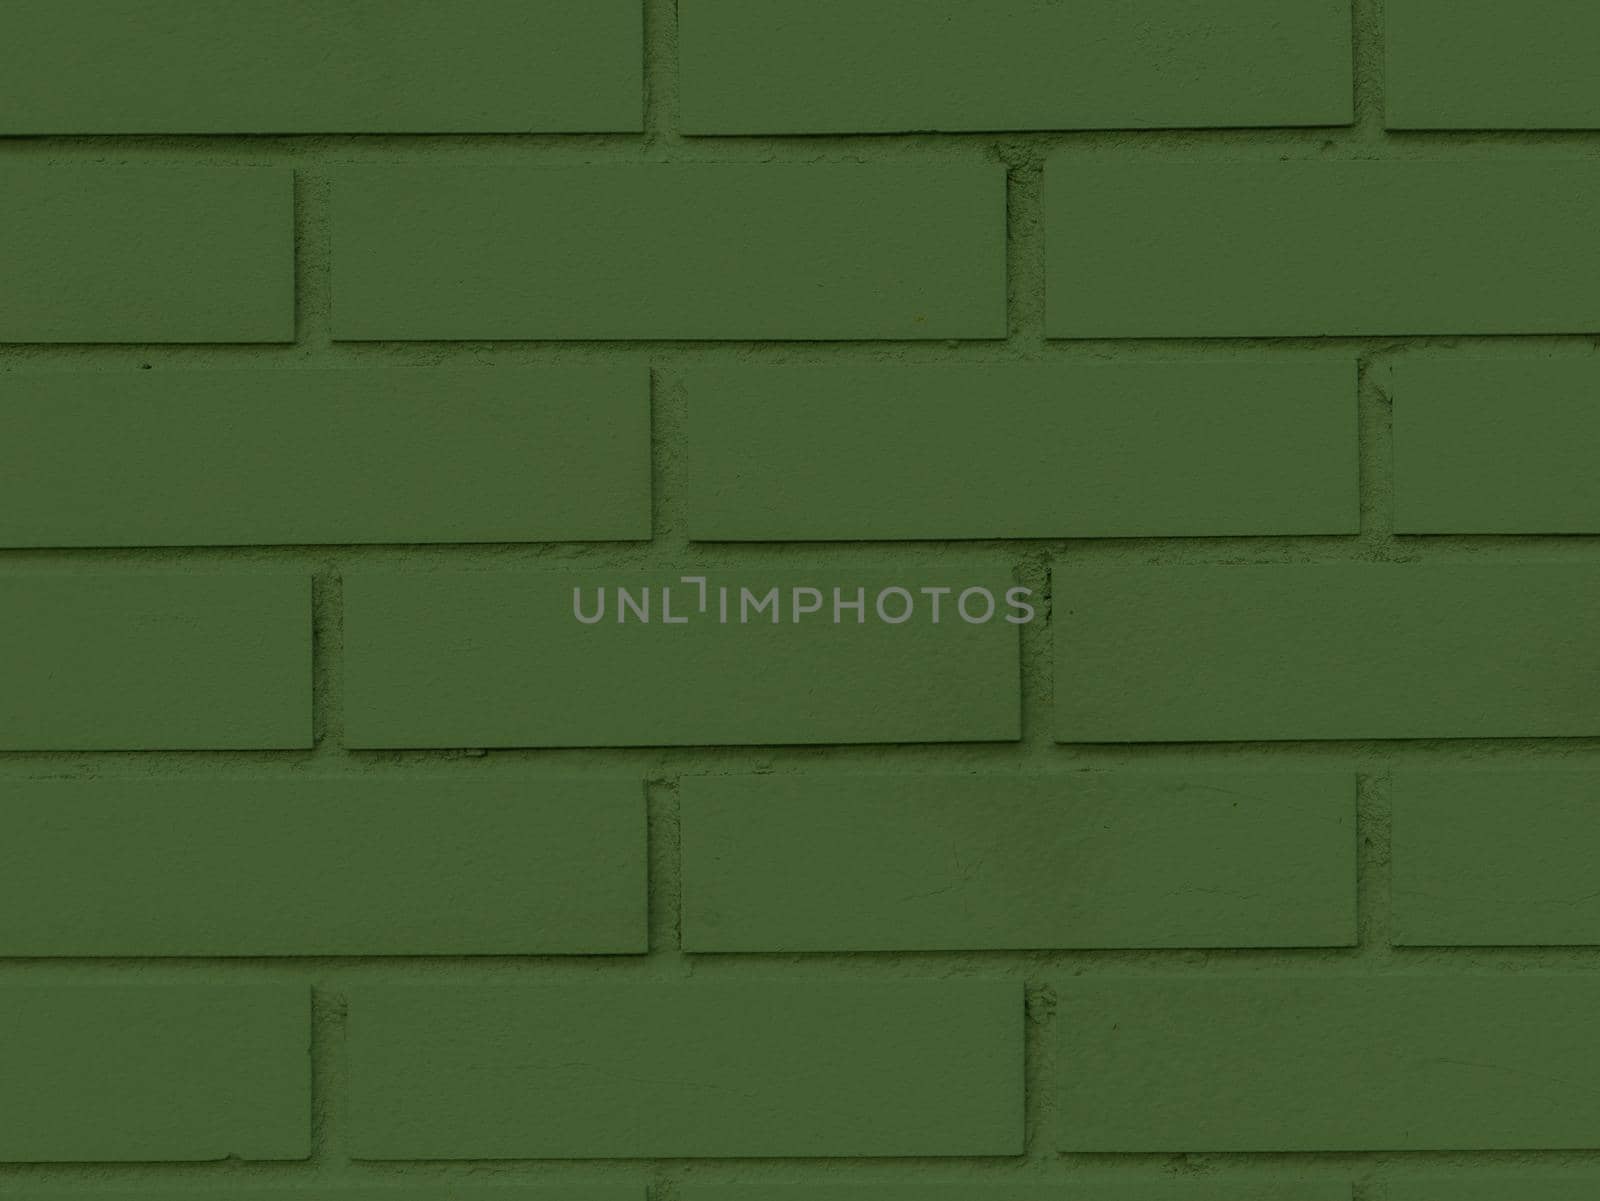 Old Green Brick Building Surface. Patinated and textured brick wall